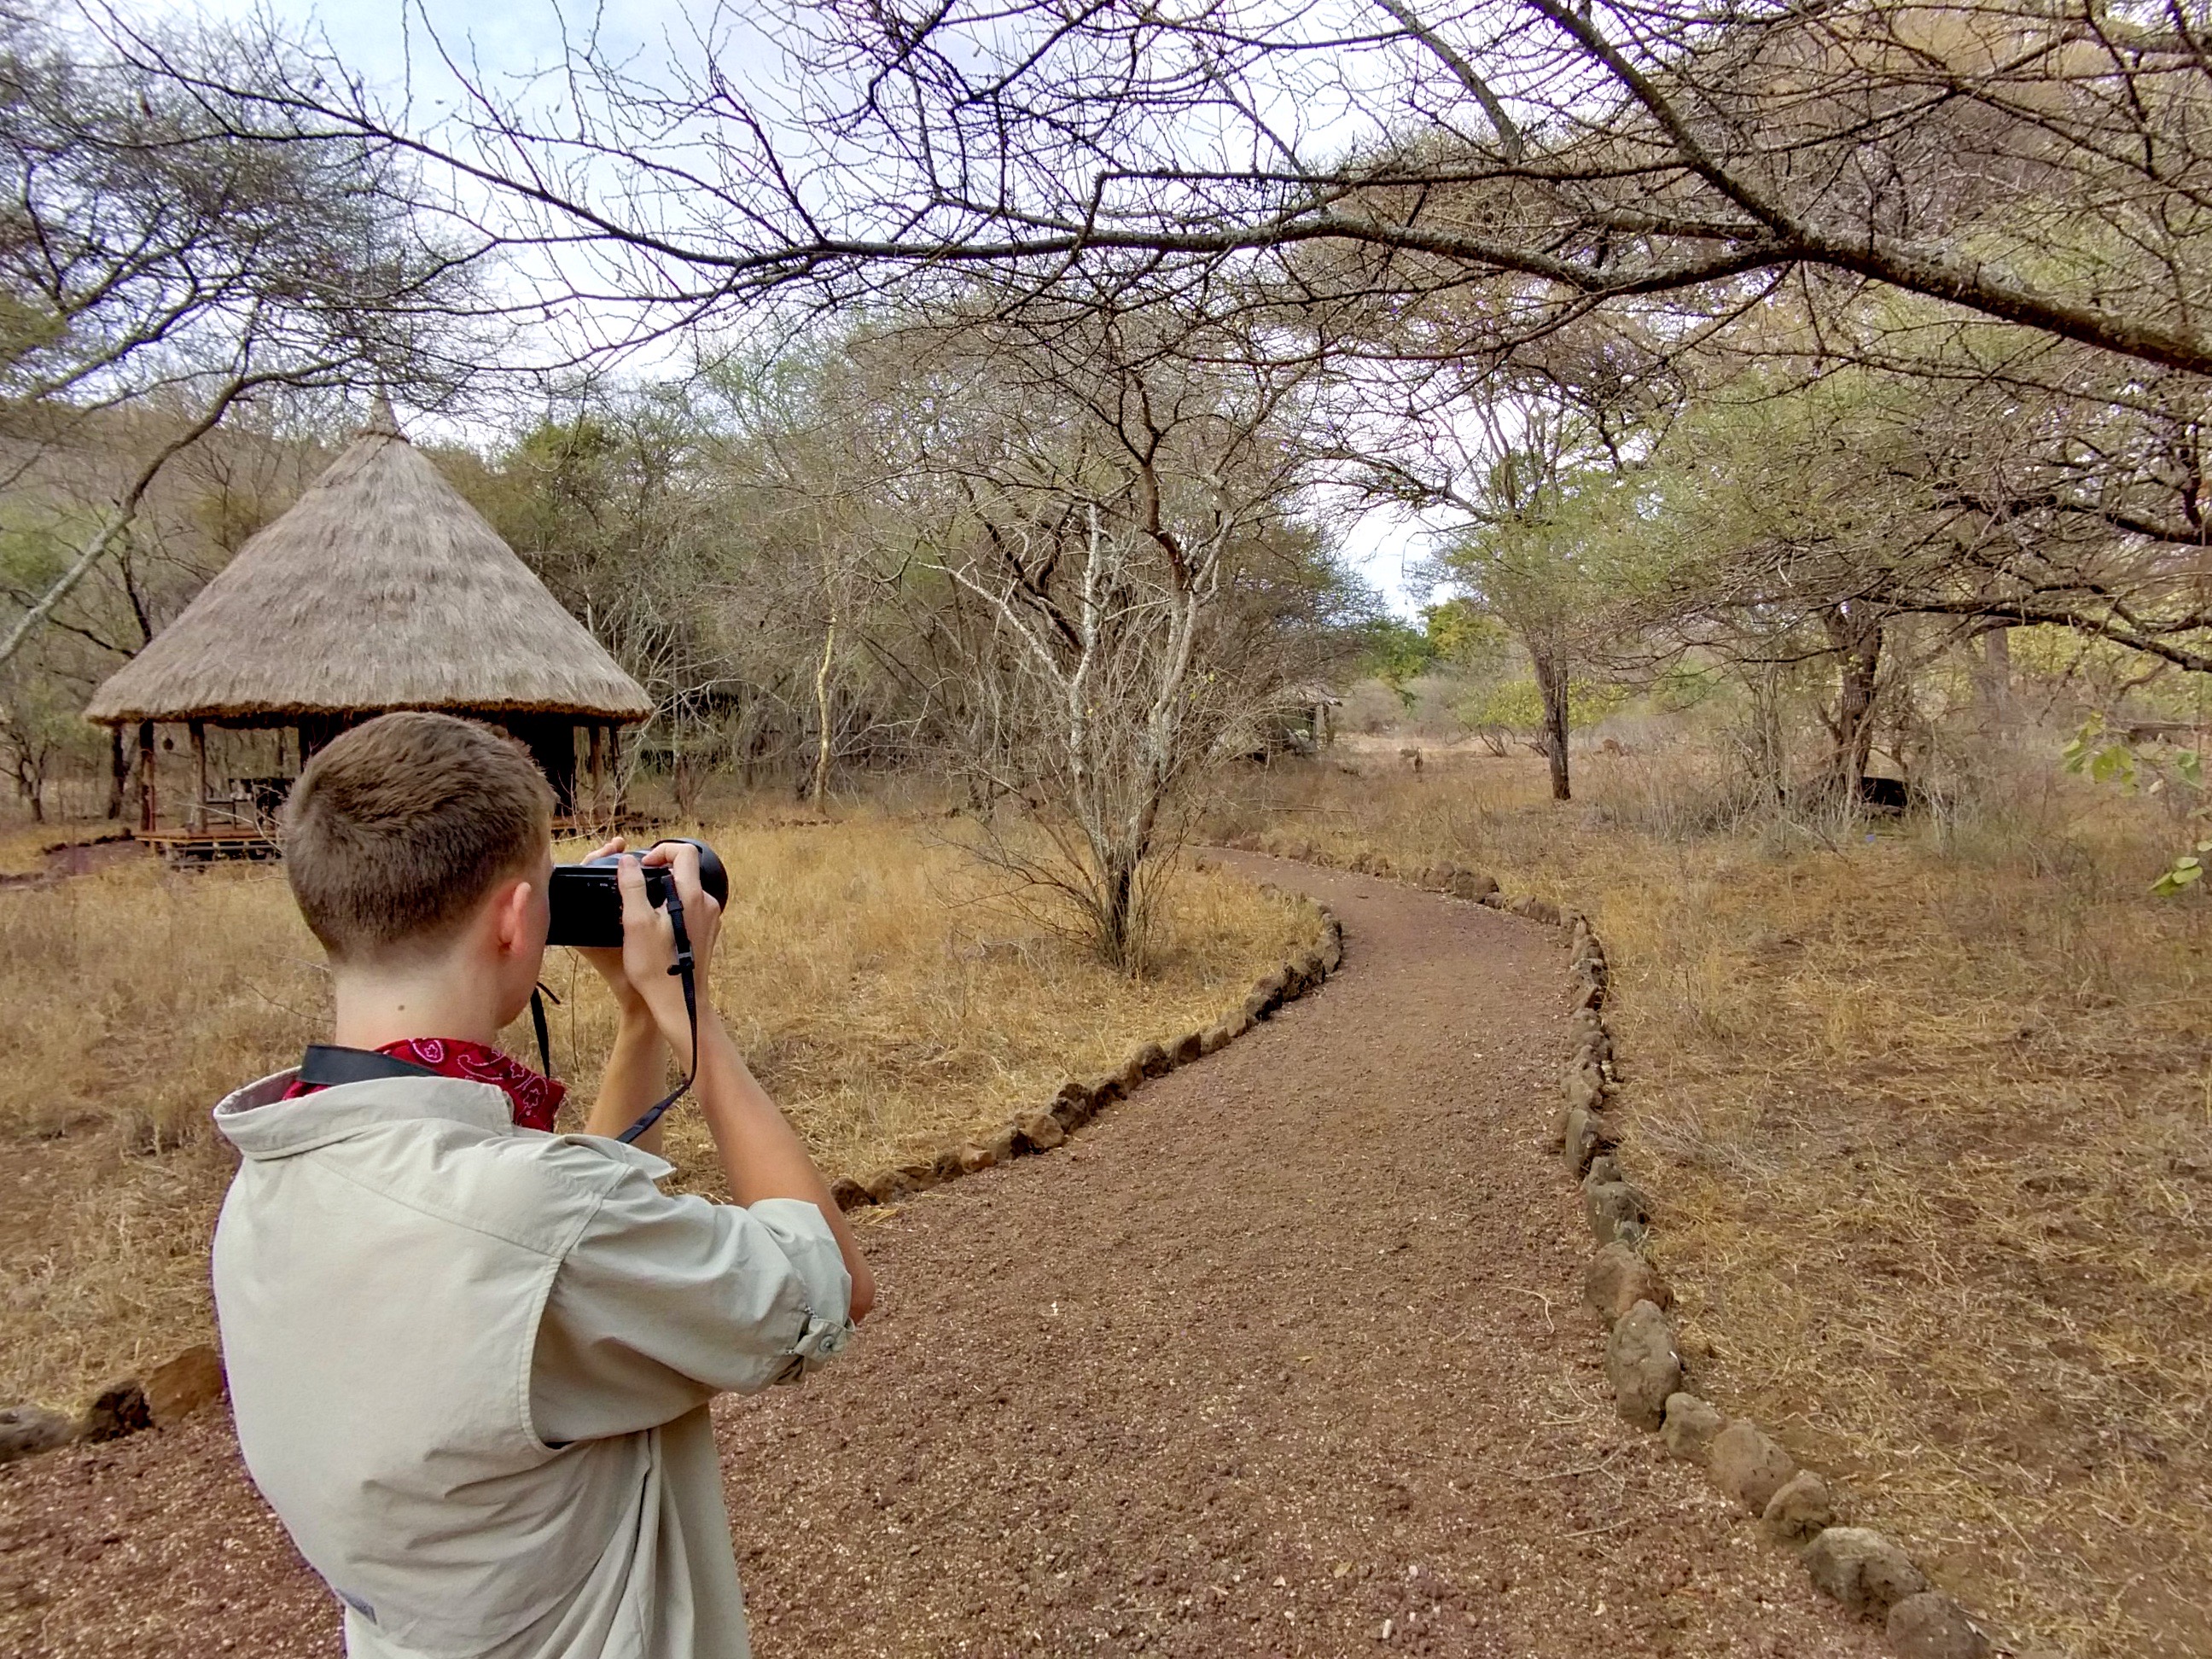 Young man taking a photo in Tanzania